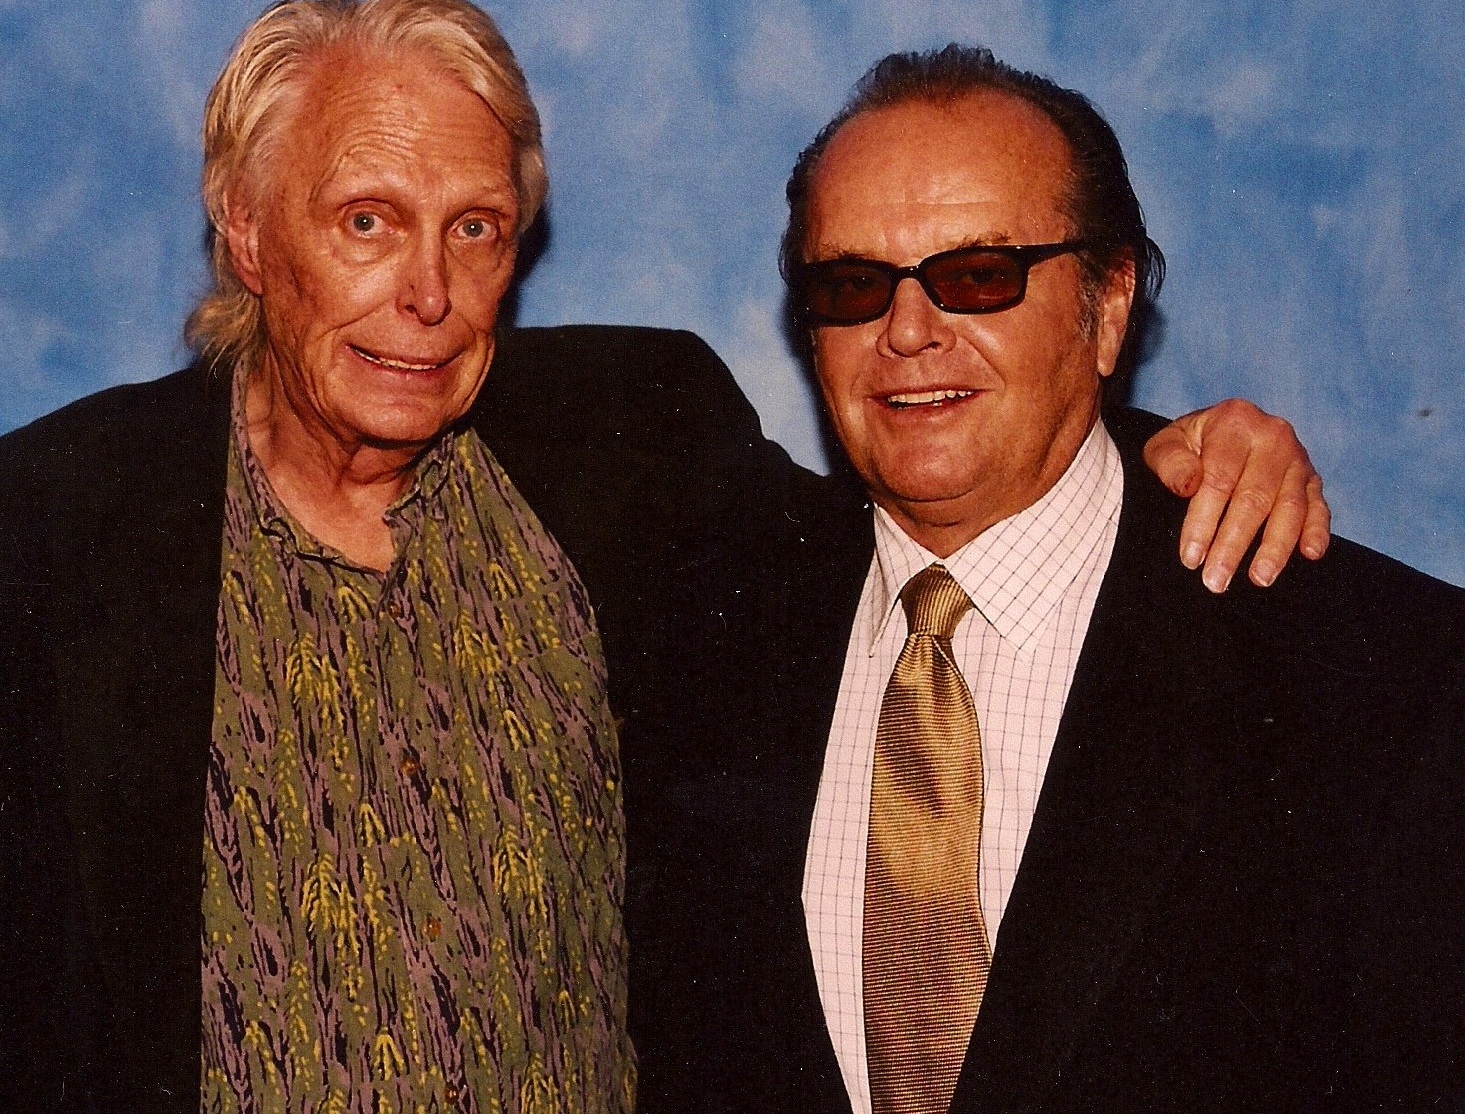 With Jack Nicholson